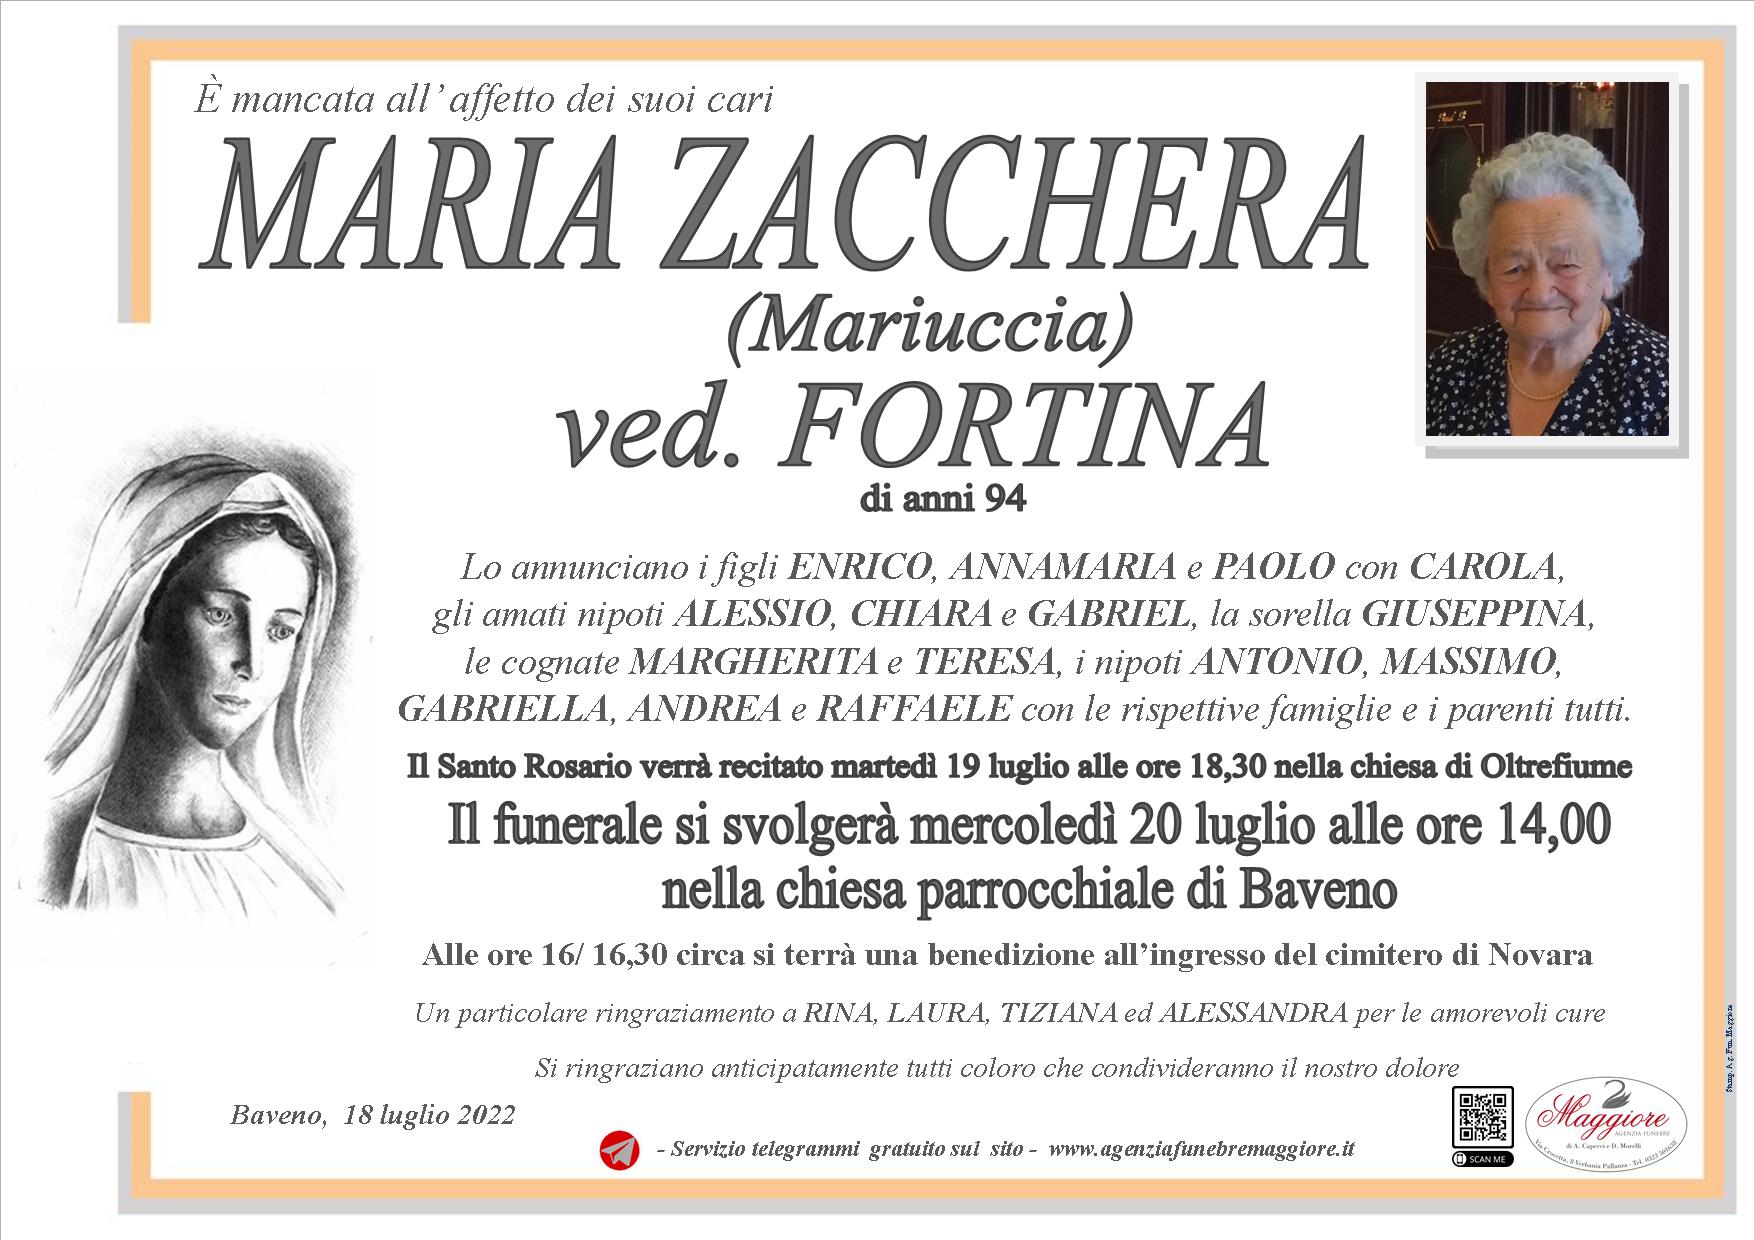 Mariuccia Zacchera ved. Fortina